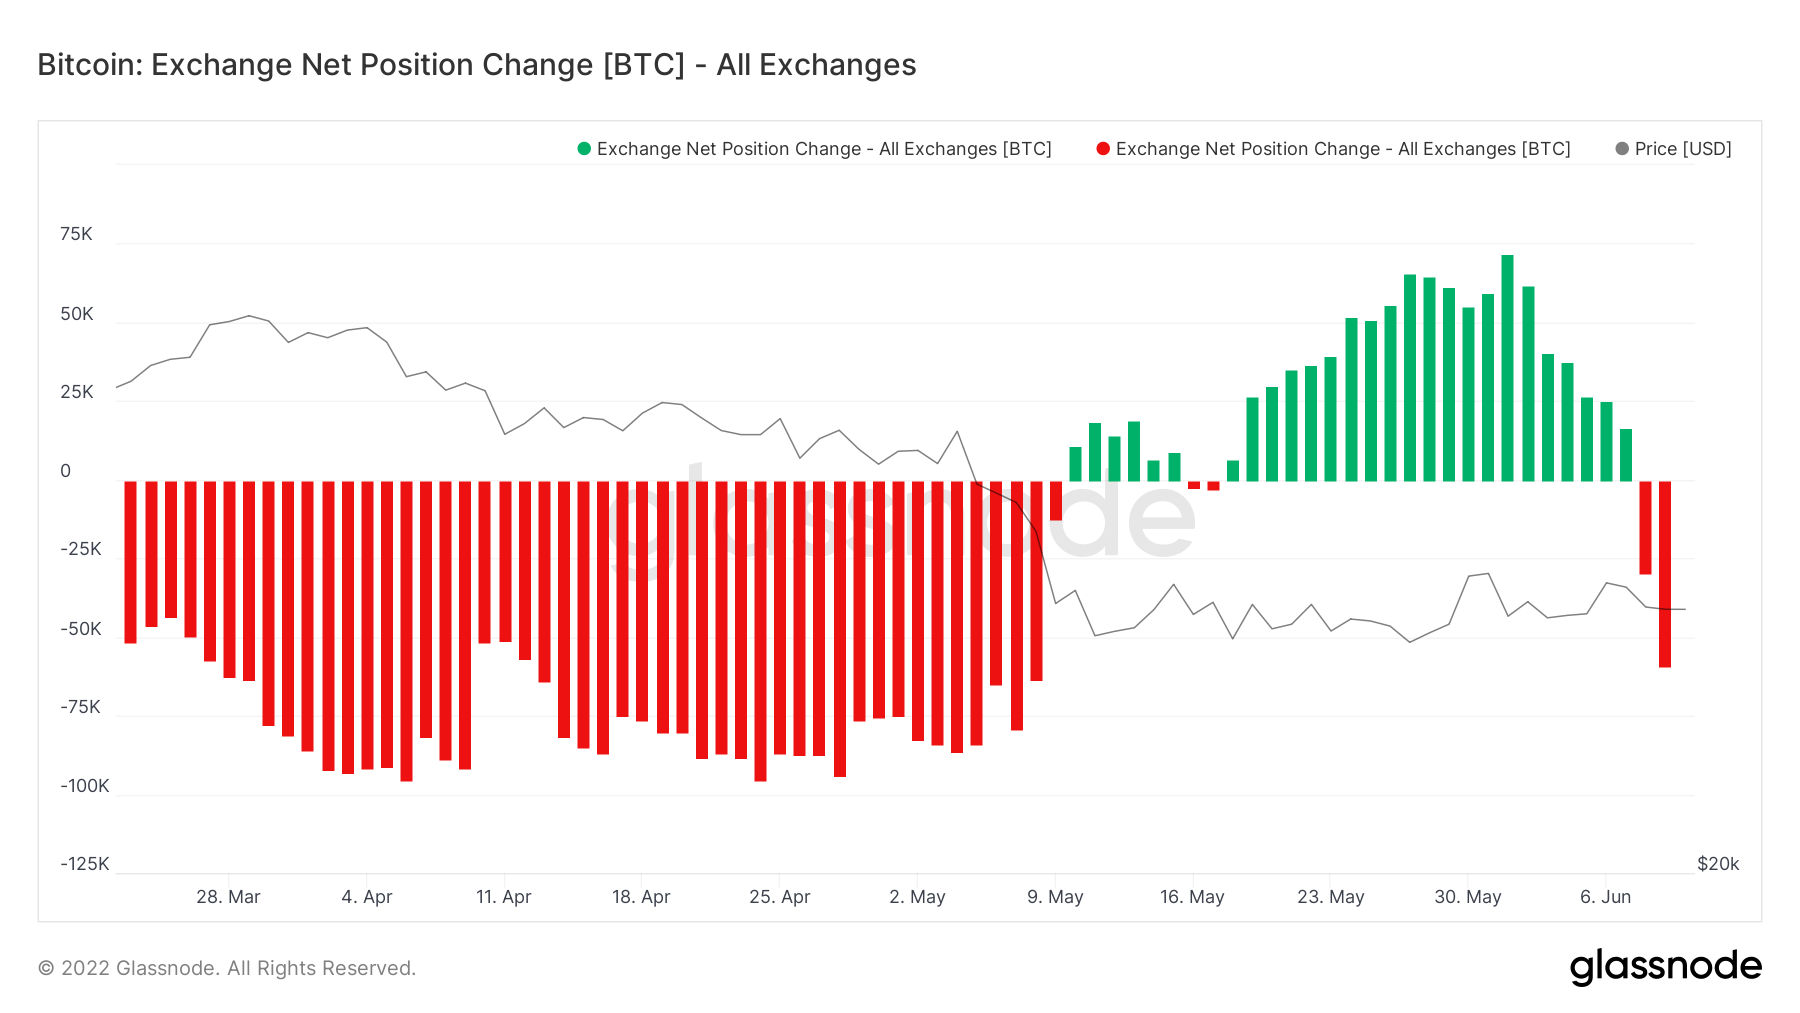 BTC exchange net position change